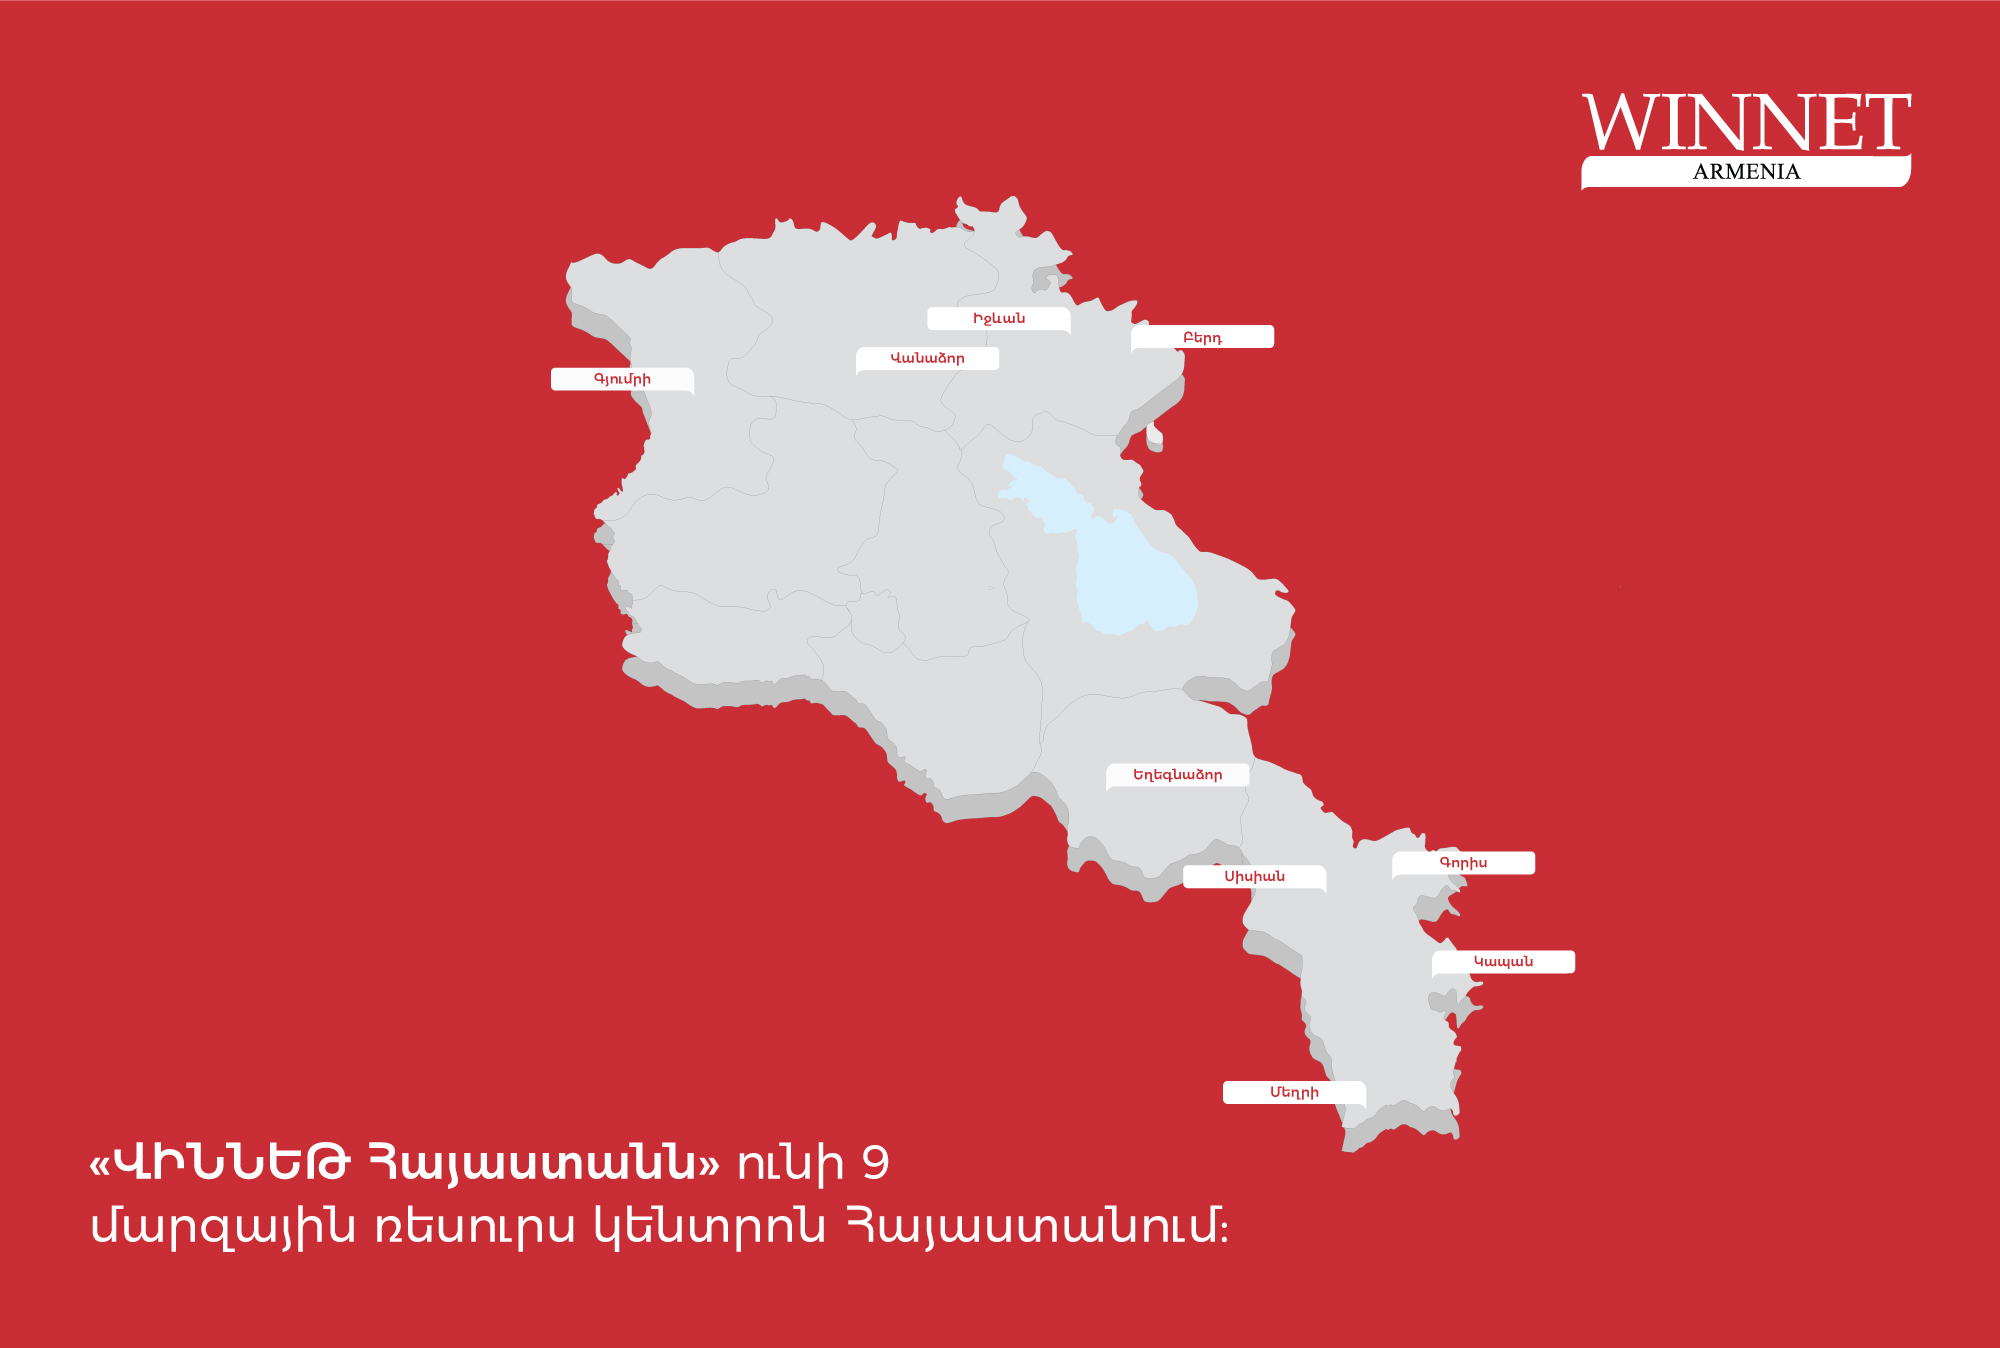 MARKETING CAMPAIGN FOR WINNET ARMENIA